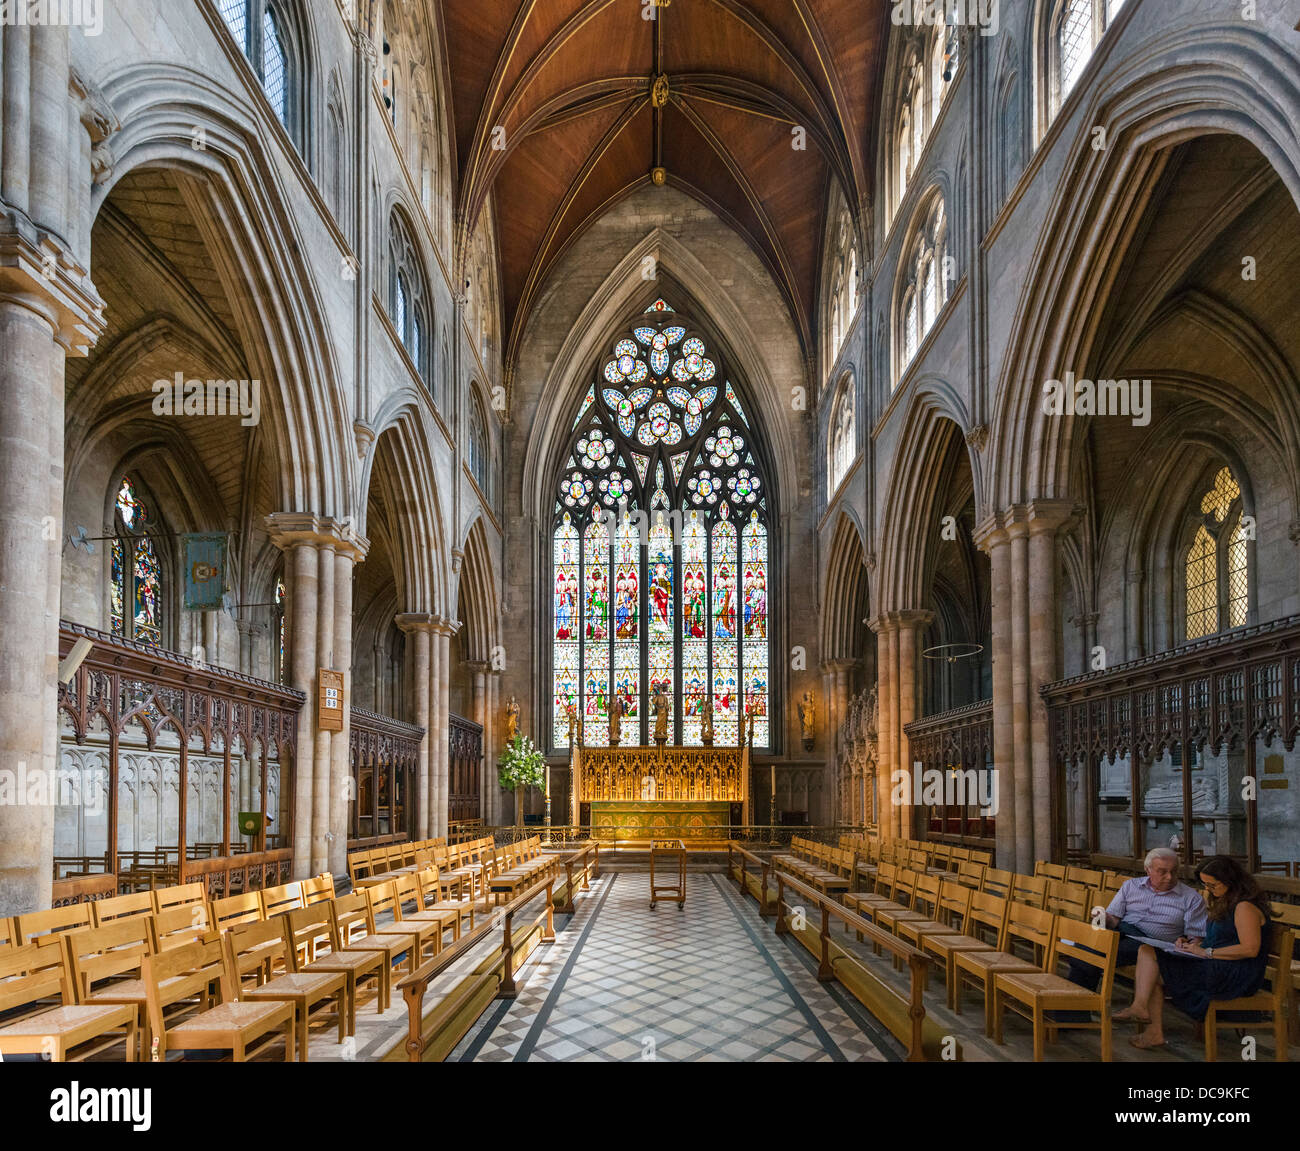 Innenraum der Kathedrale von Ripon, Ripon, North Yorkshire, England, UK Stockfoto